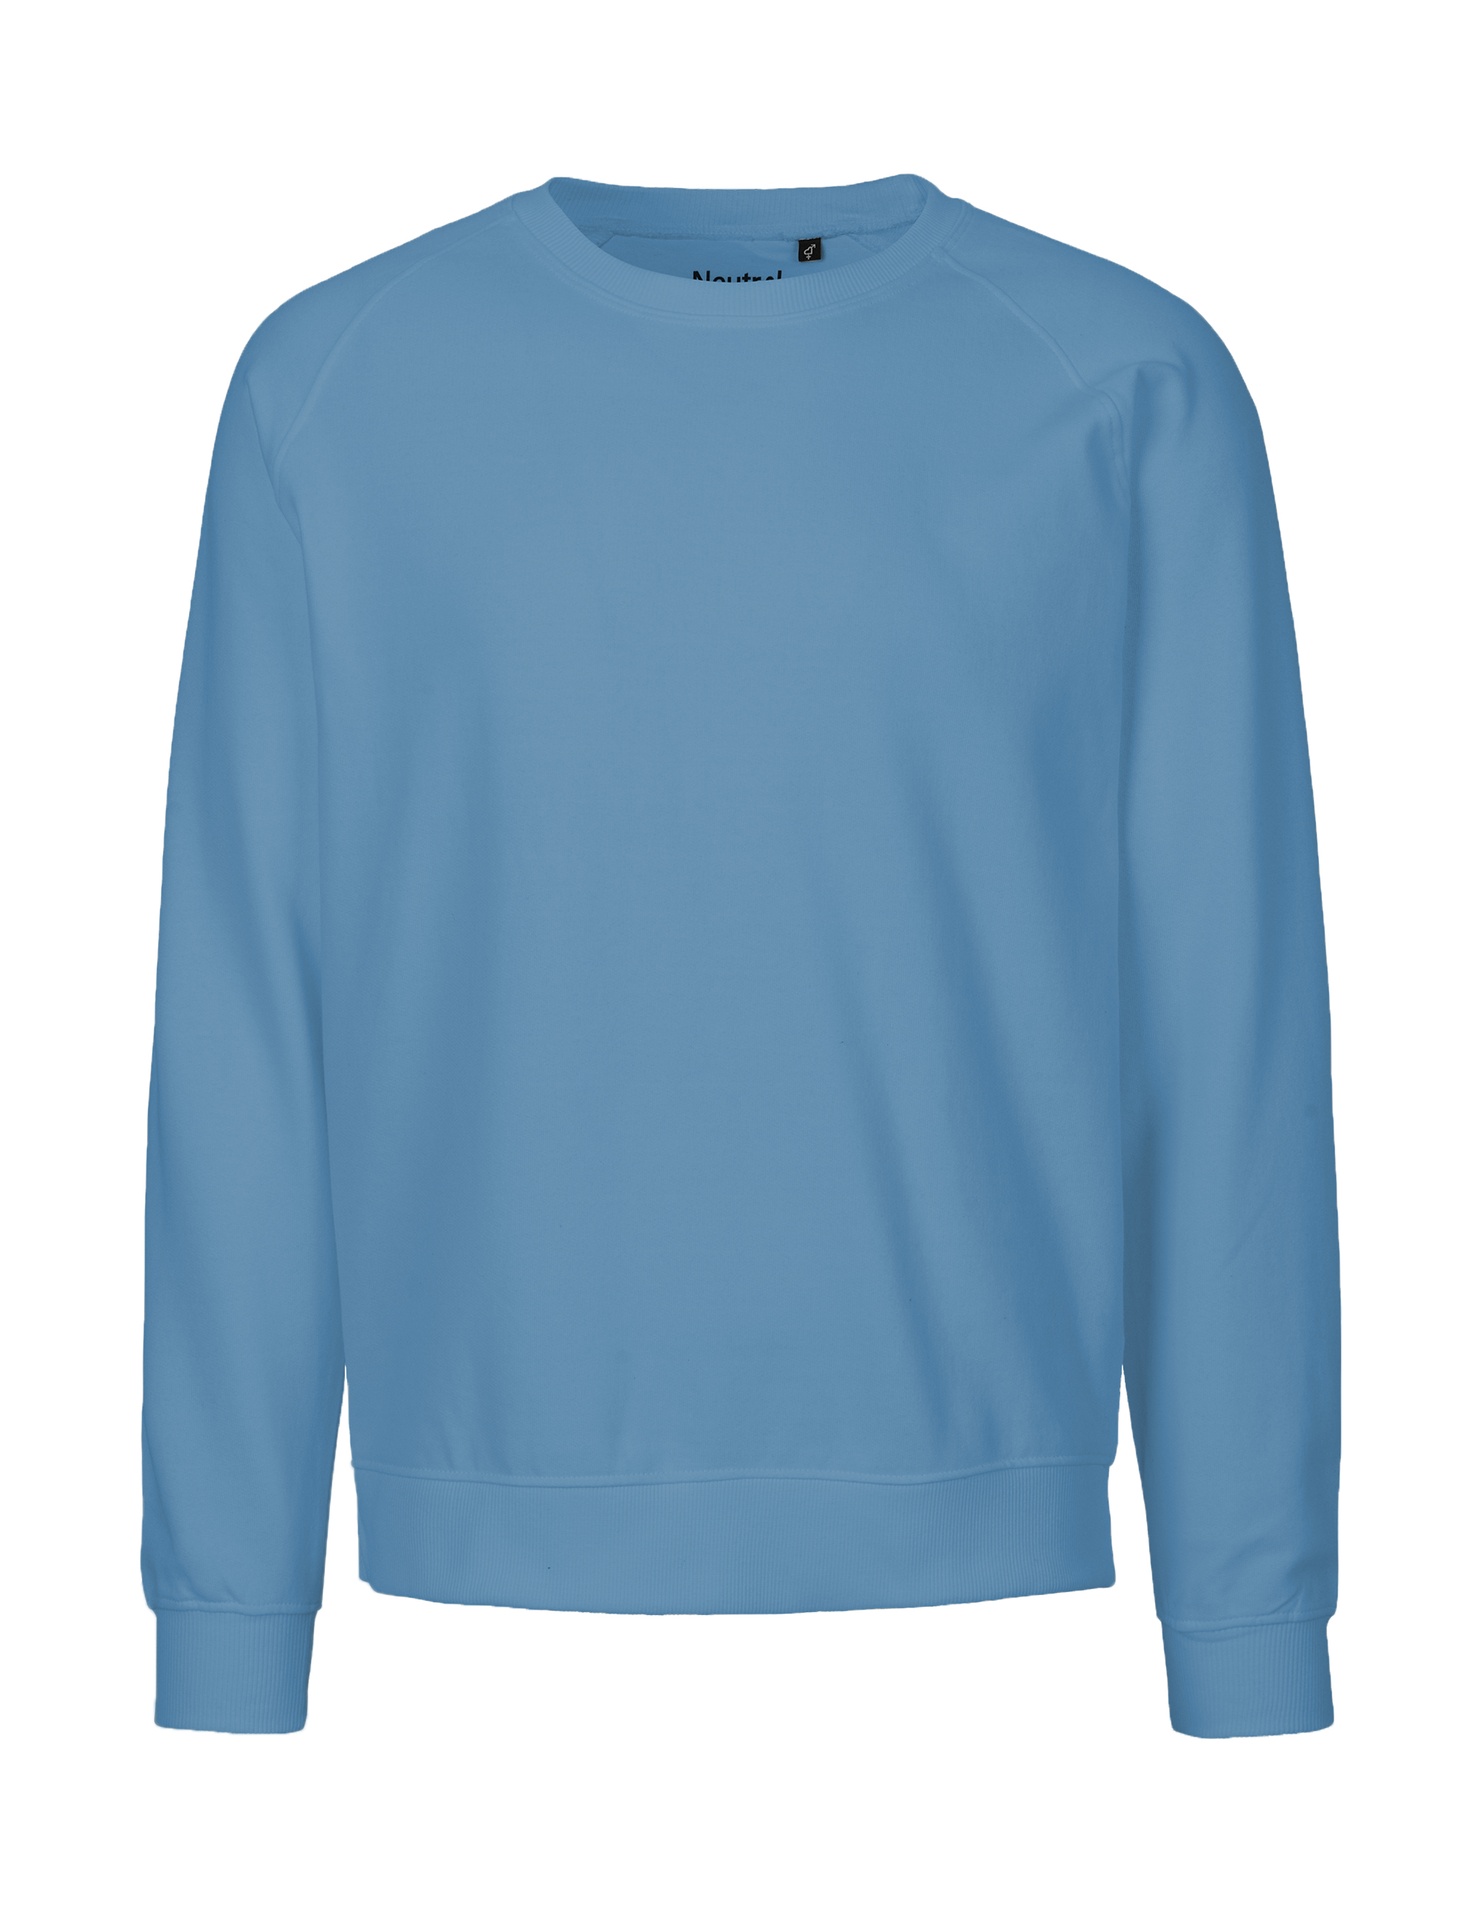 [PR/02833] Unisex Sweatshirt (Dusty Indigo 41, S)